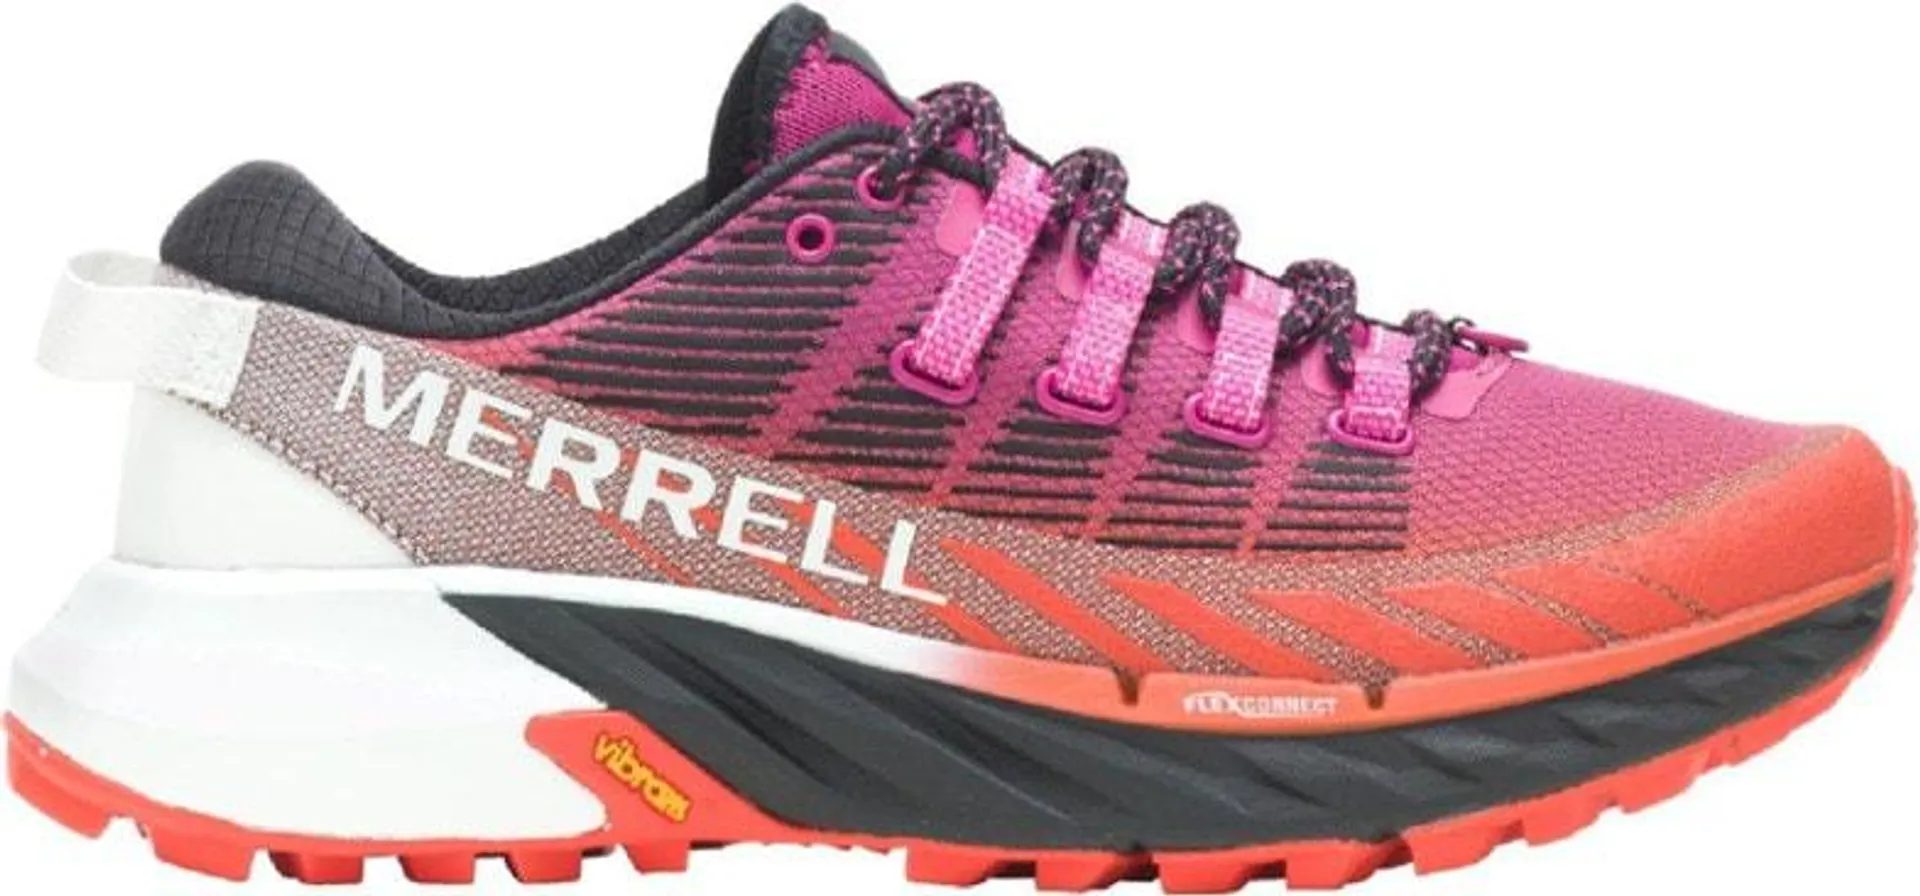 Merrell Agility Peak 4 Trail-Running Shoes - Women's